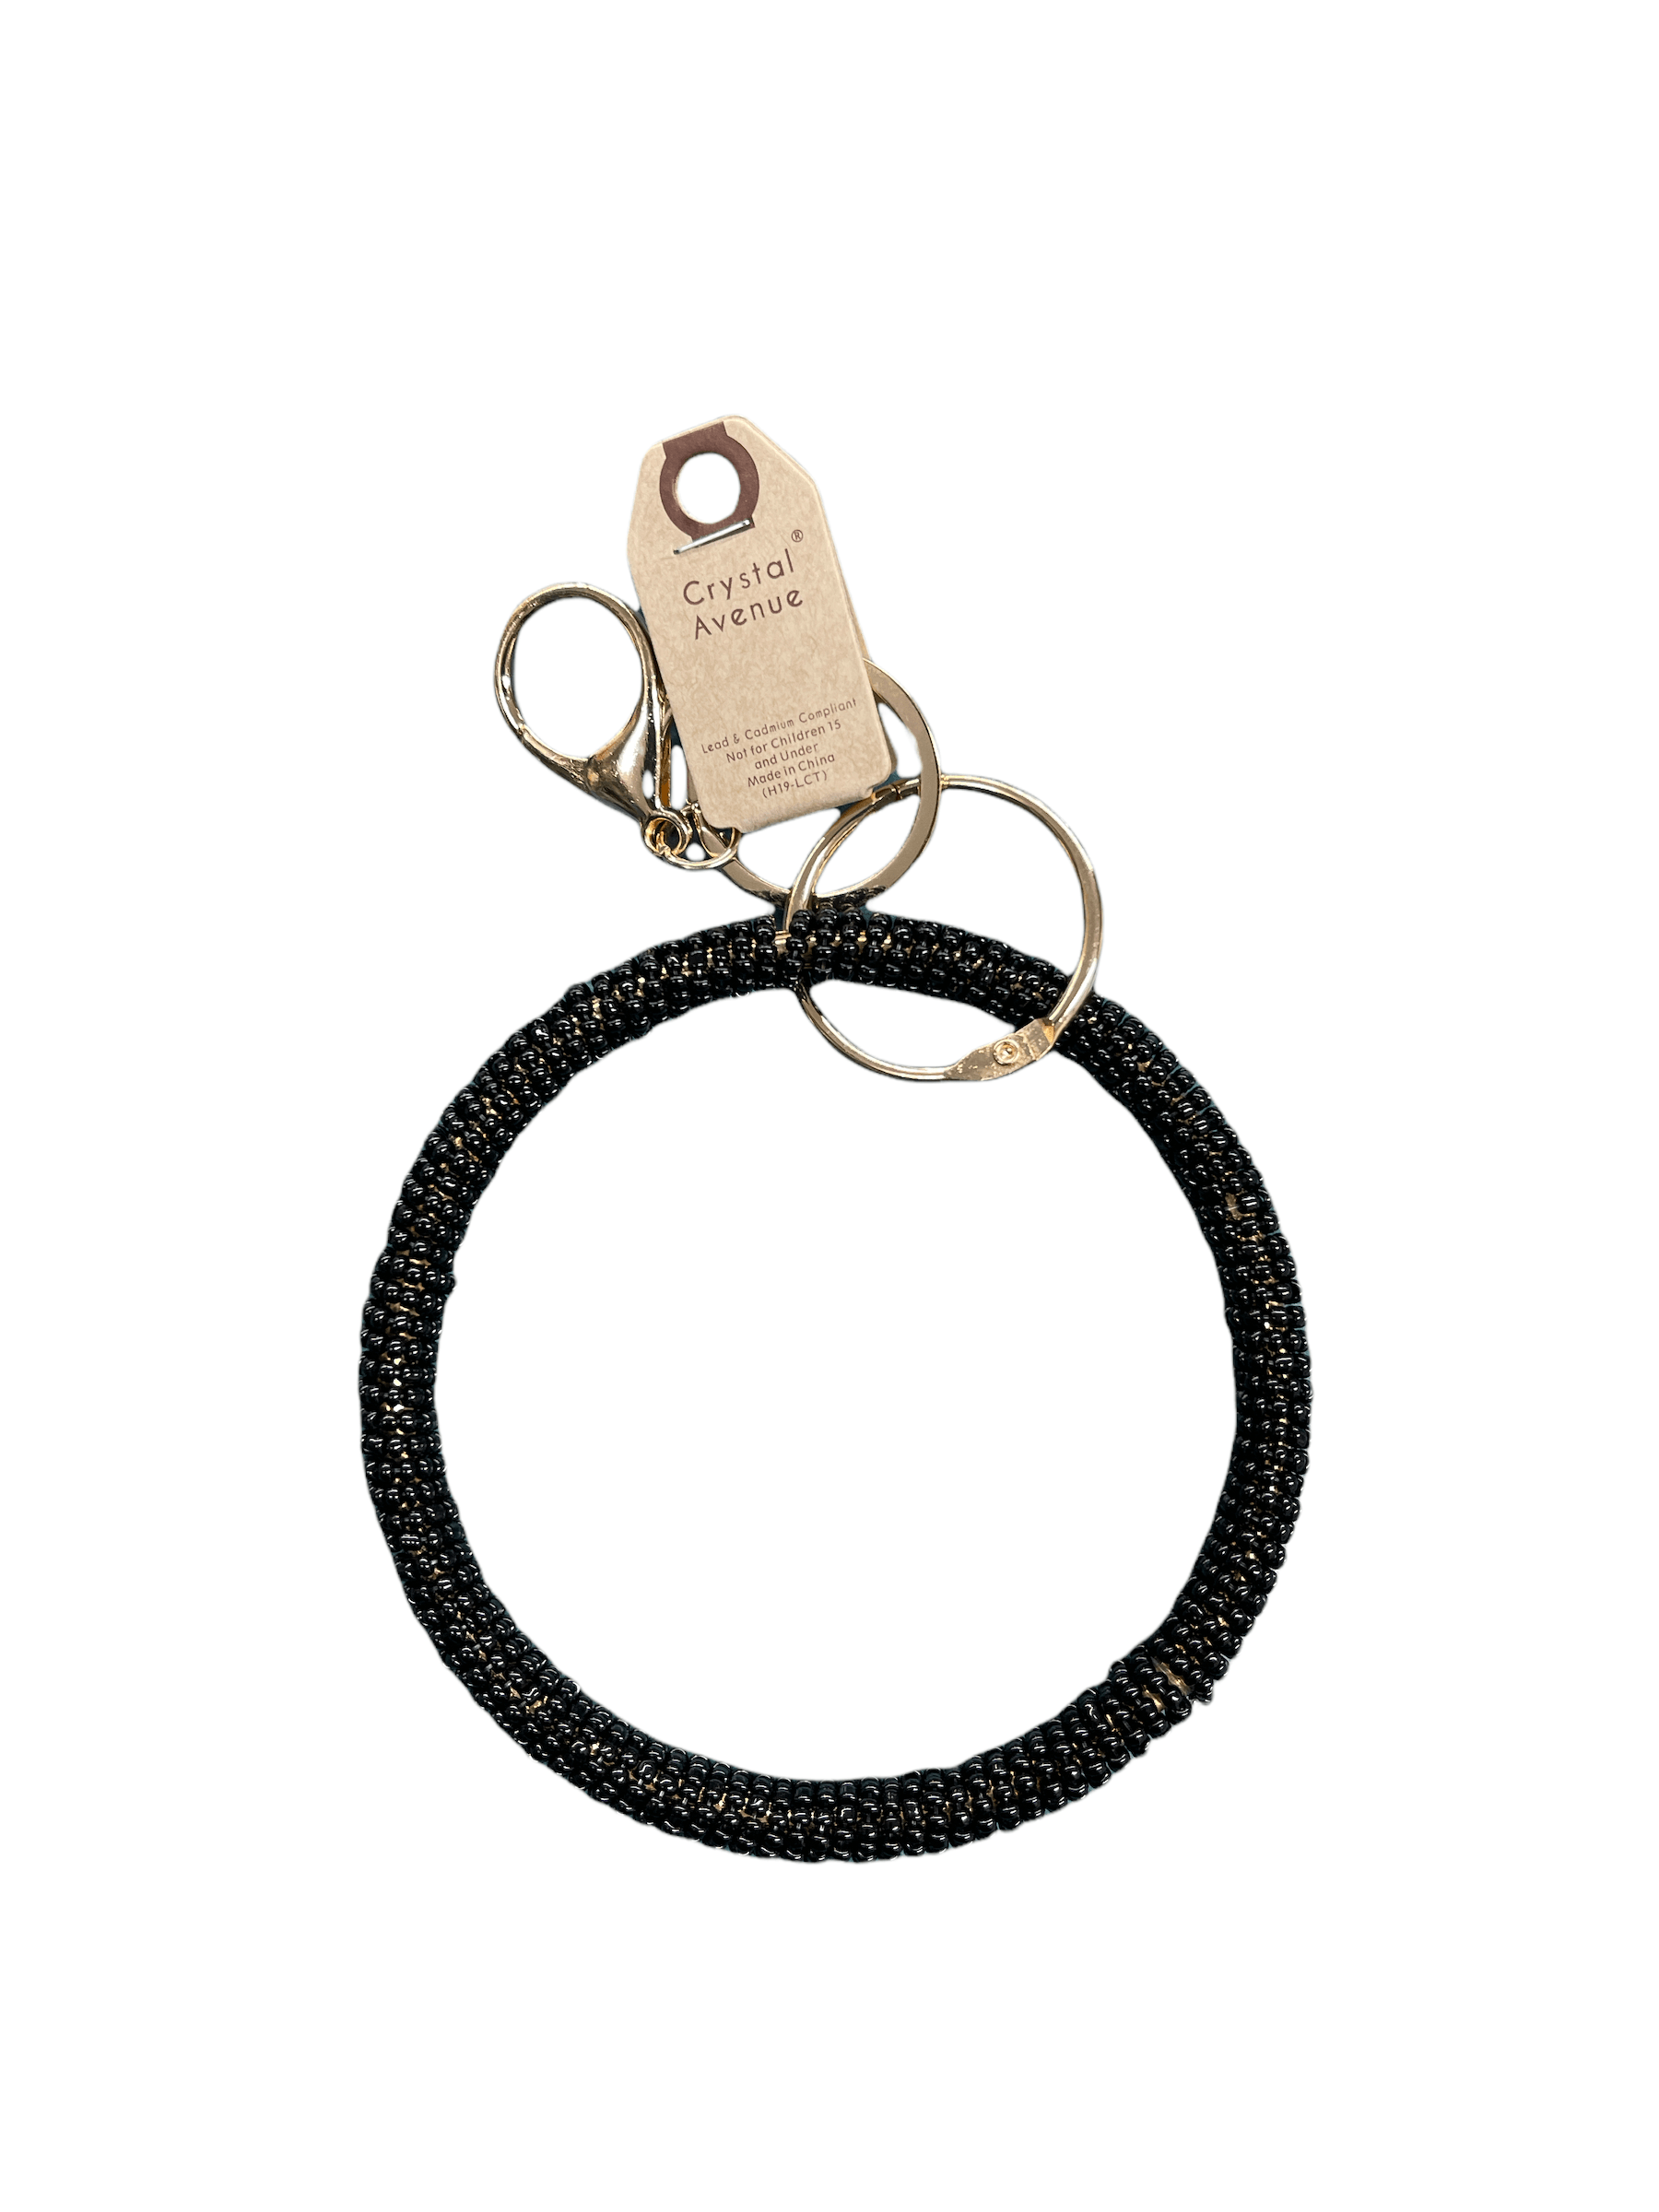 Ring Bead Keychain Bracelet (PC)